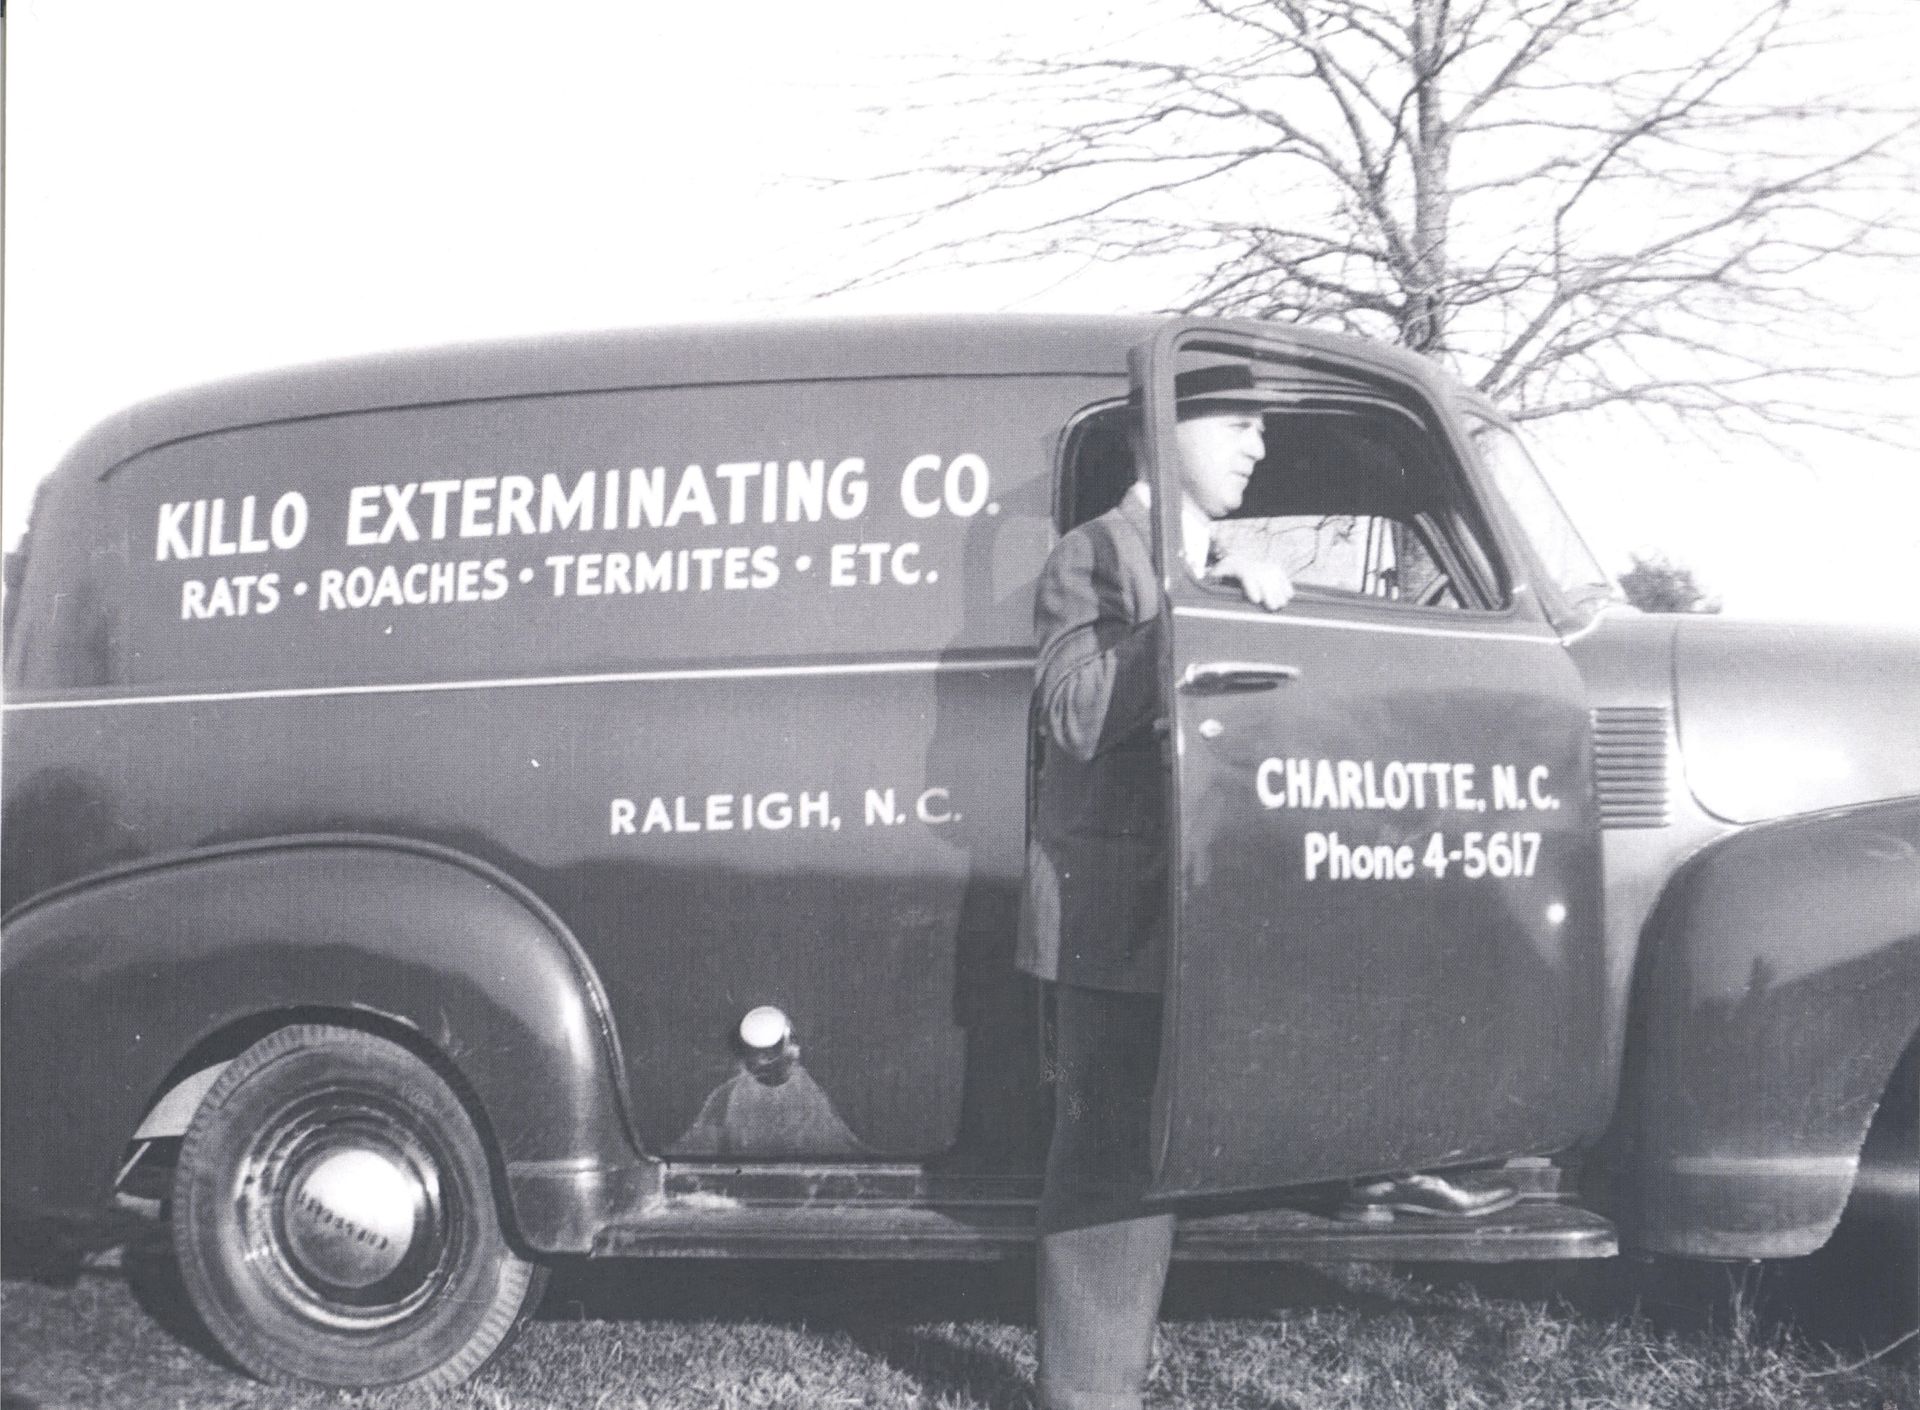 Original Killo Exterminating Car in 1939 in Raleigh, NC